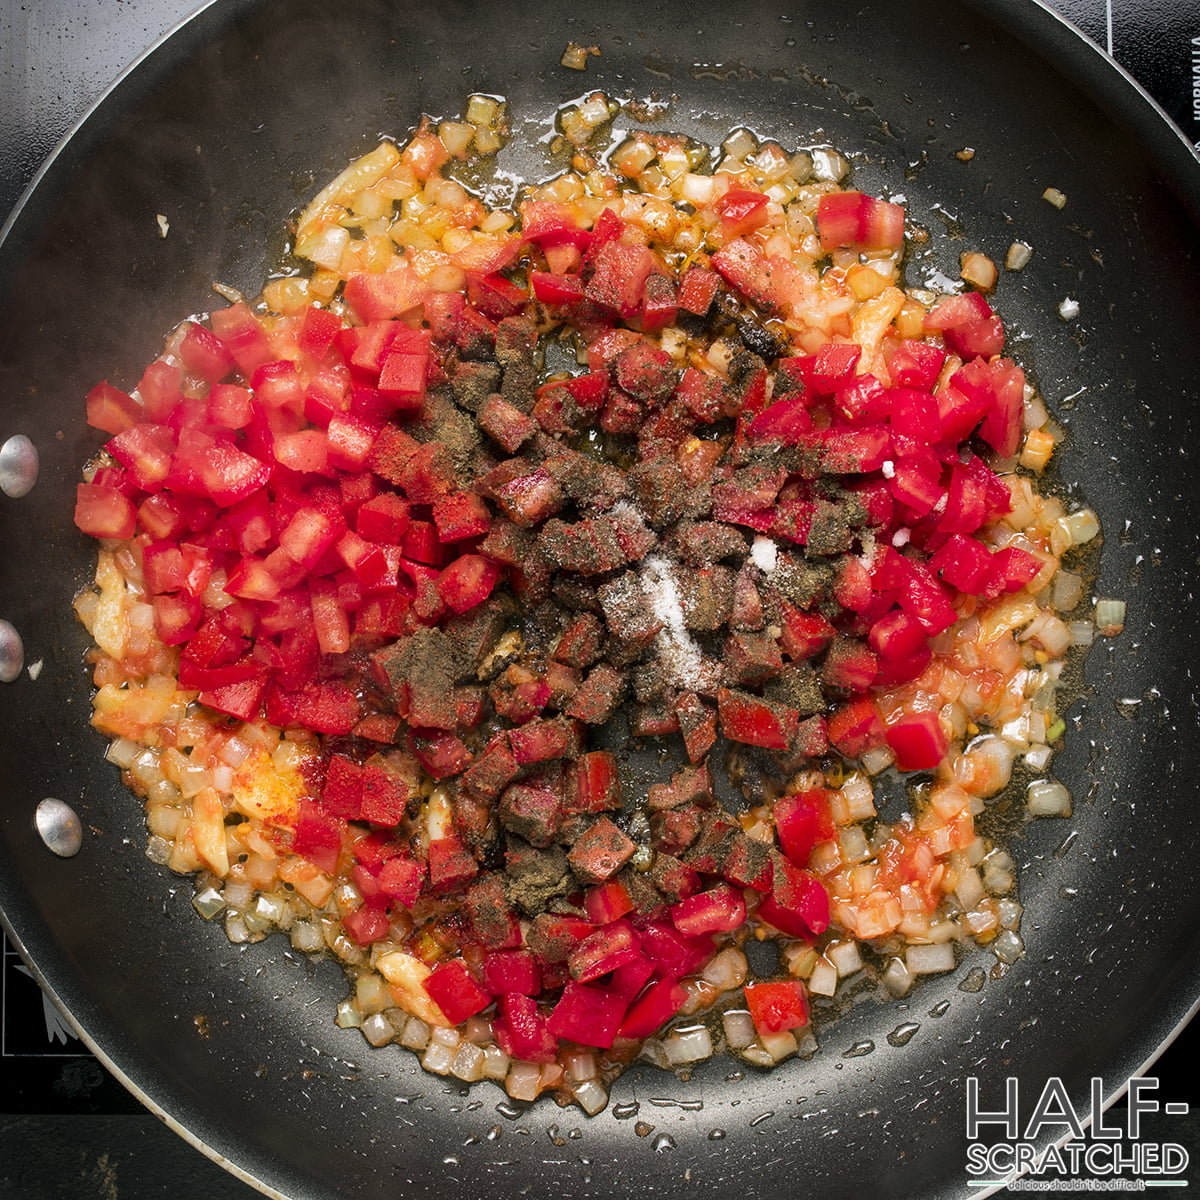  Diced tomato, salt, black pepper, and paprika